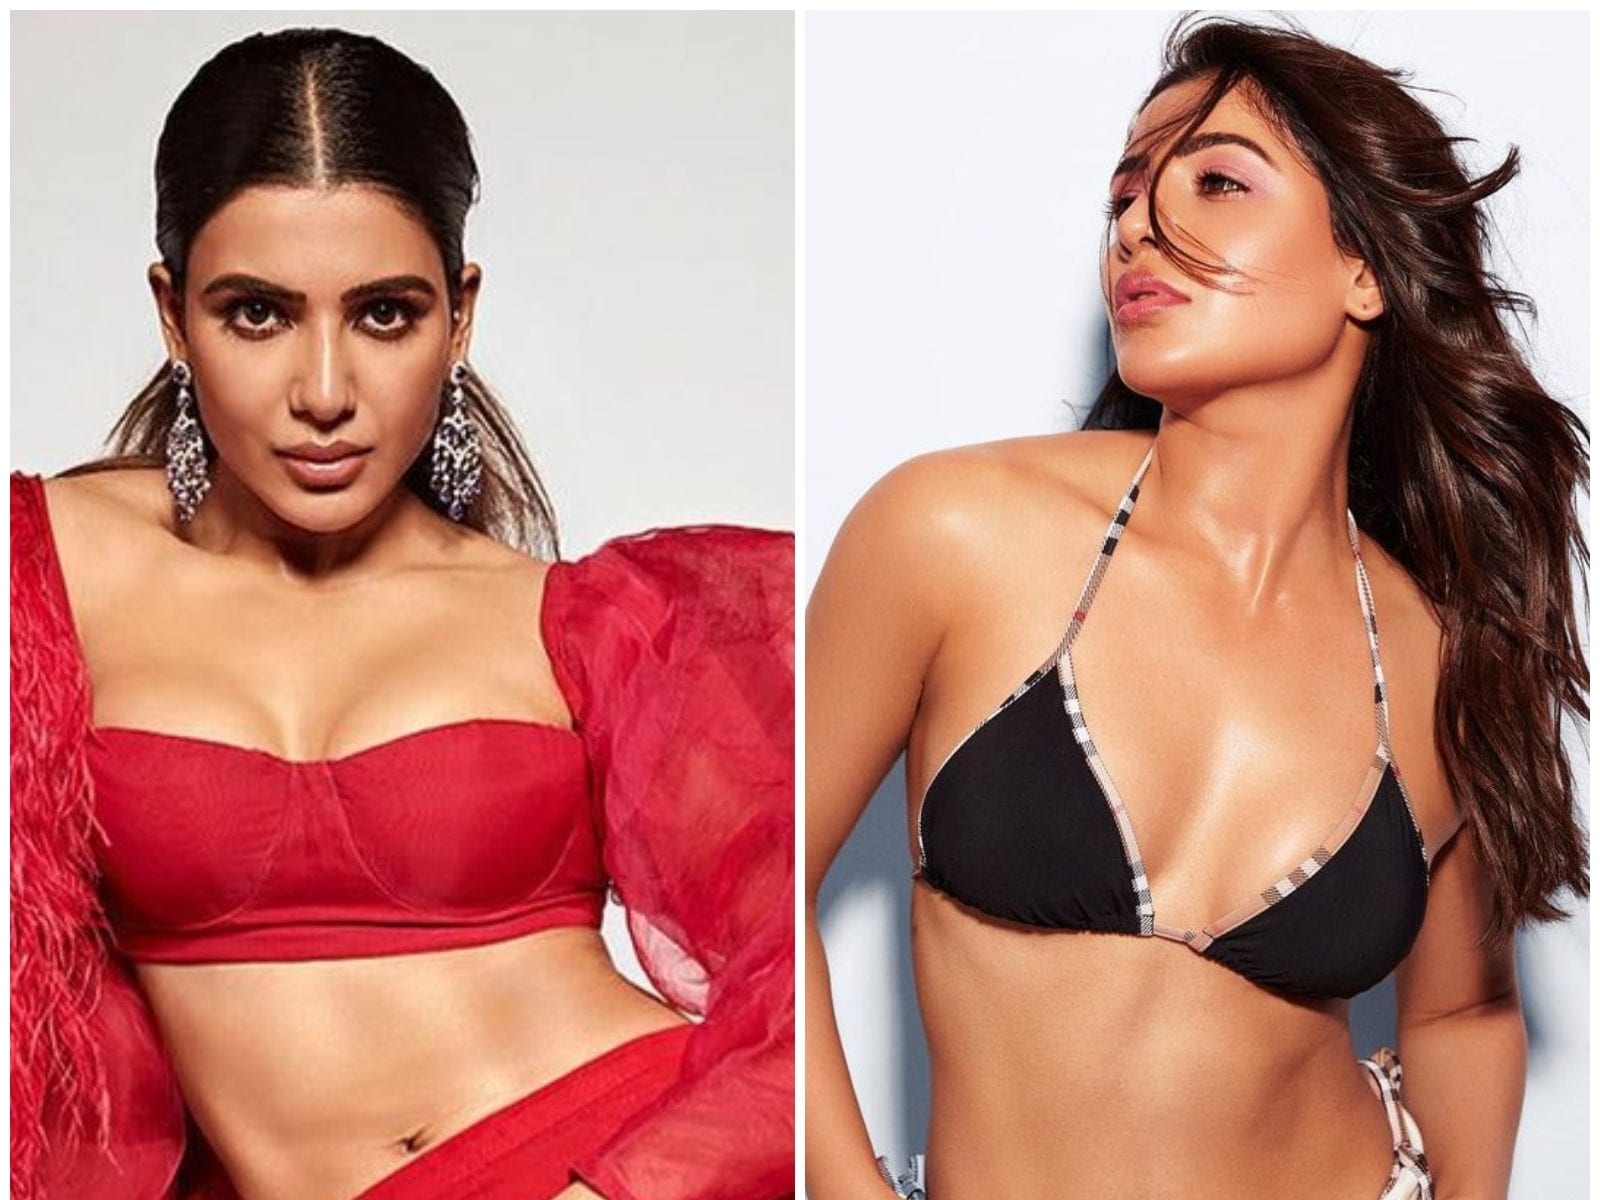 Samata Sex Videos - Top 10 Hot and Bold Photos of Samantha Ruth Prabhu You Must See Now - News18